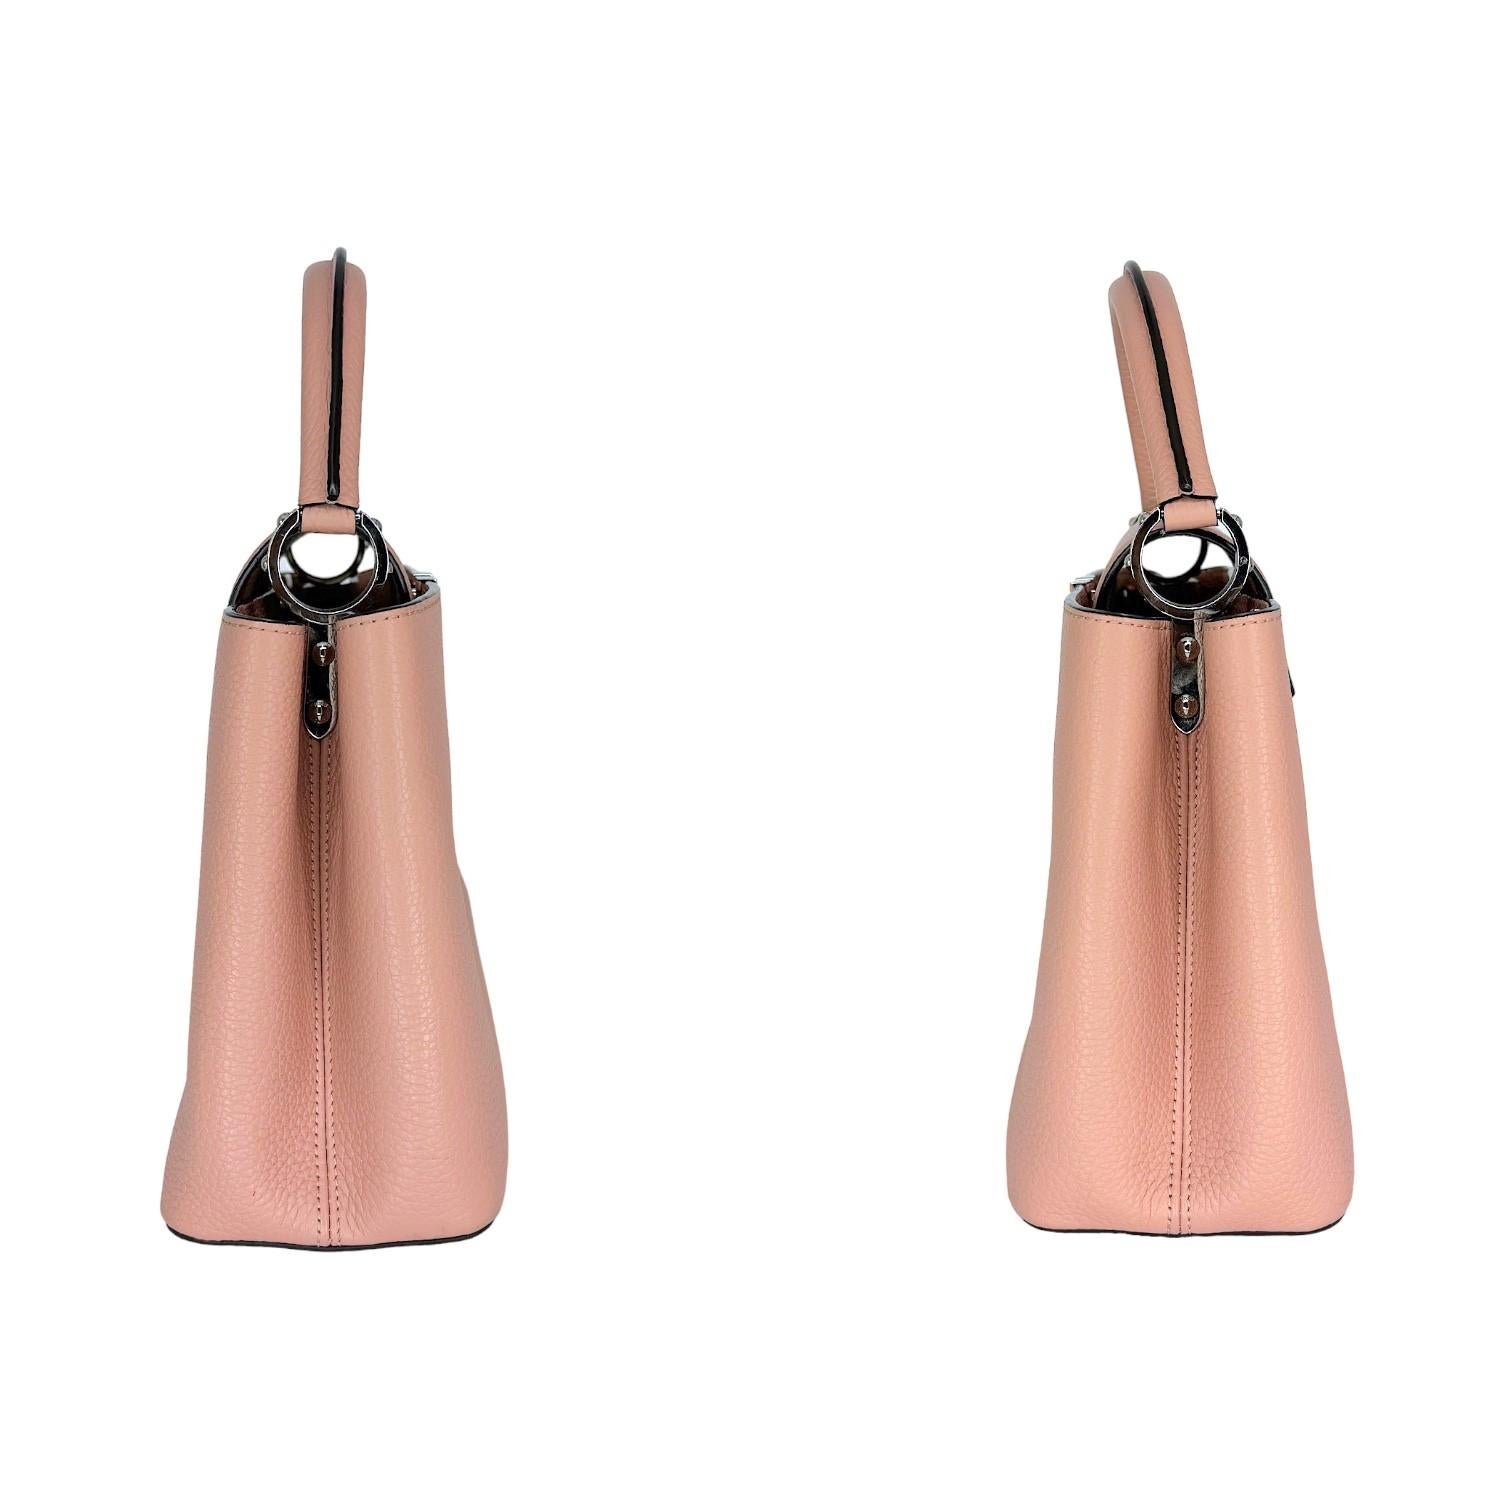 Louis Vuitton Taurillion Capucines MM Top Handle Bag In Excellent Condition For Sale In Scottsdale, AZ